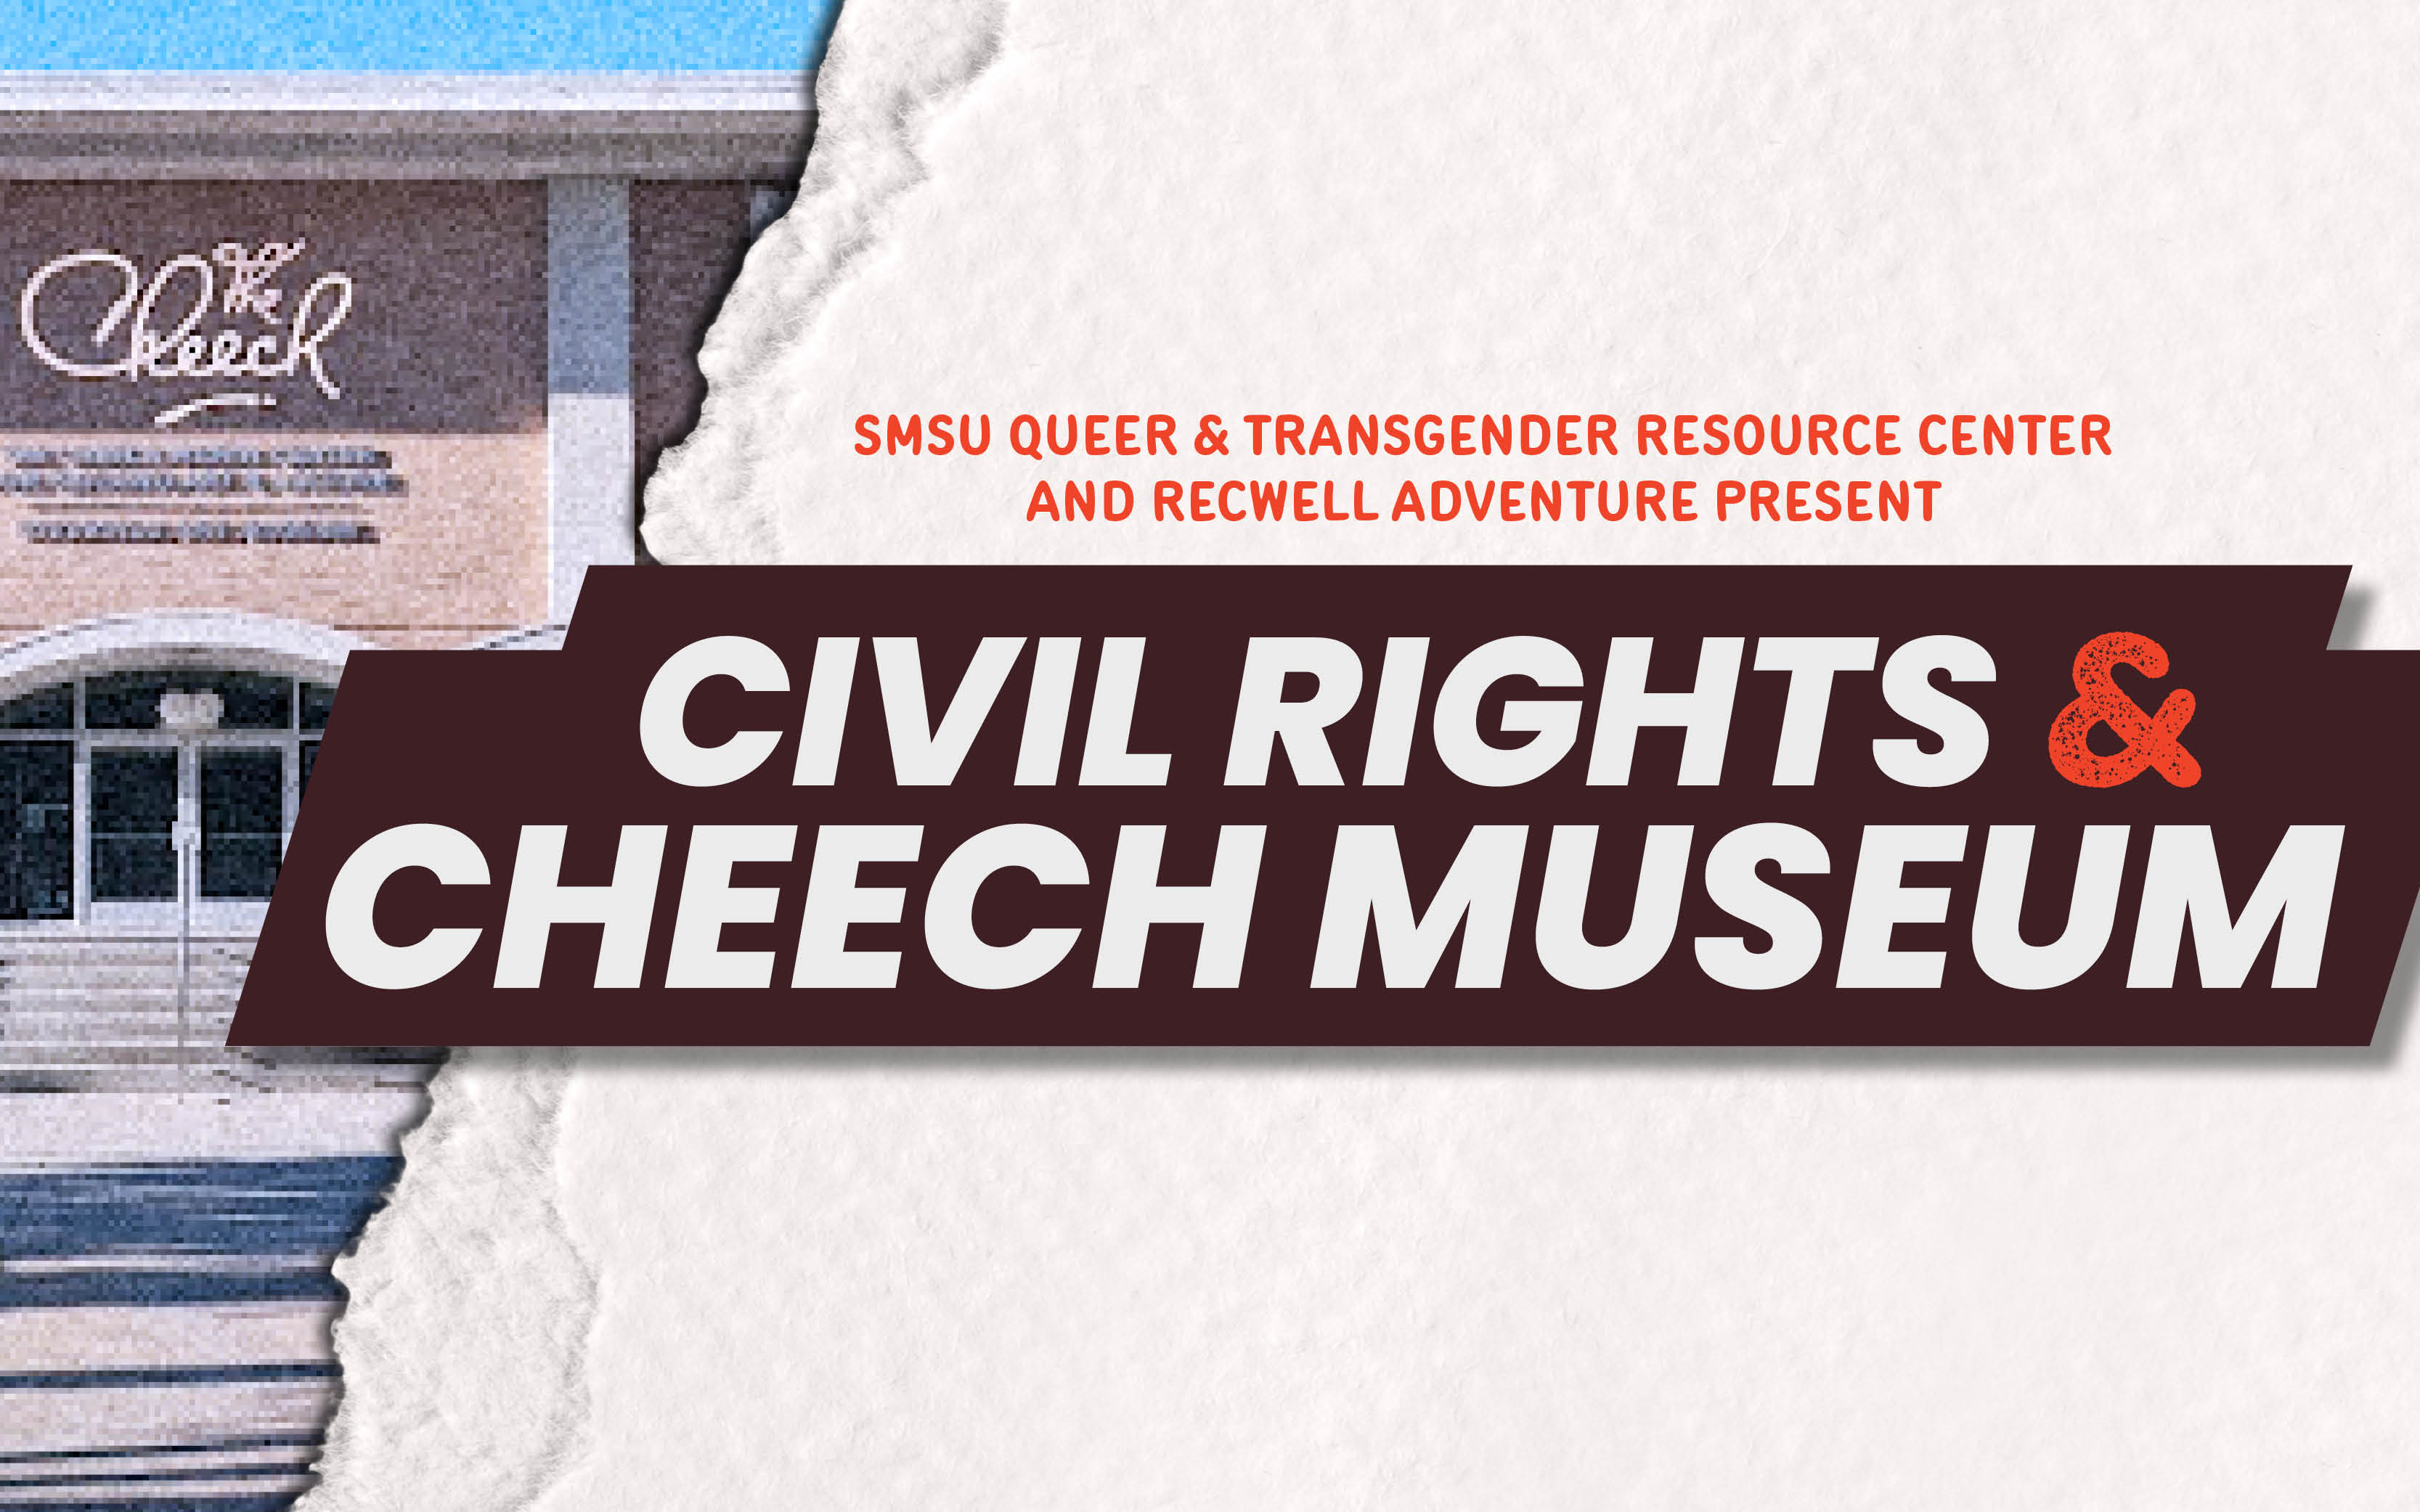 SMSU Queer & Transgender Resource Center and Recwell Adventure present Civil Rights & Cheech Museum Visit